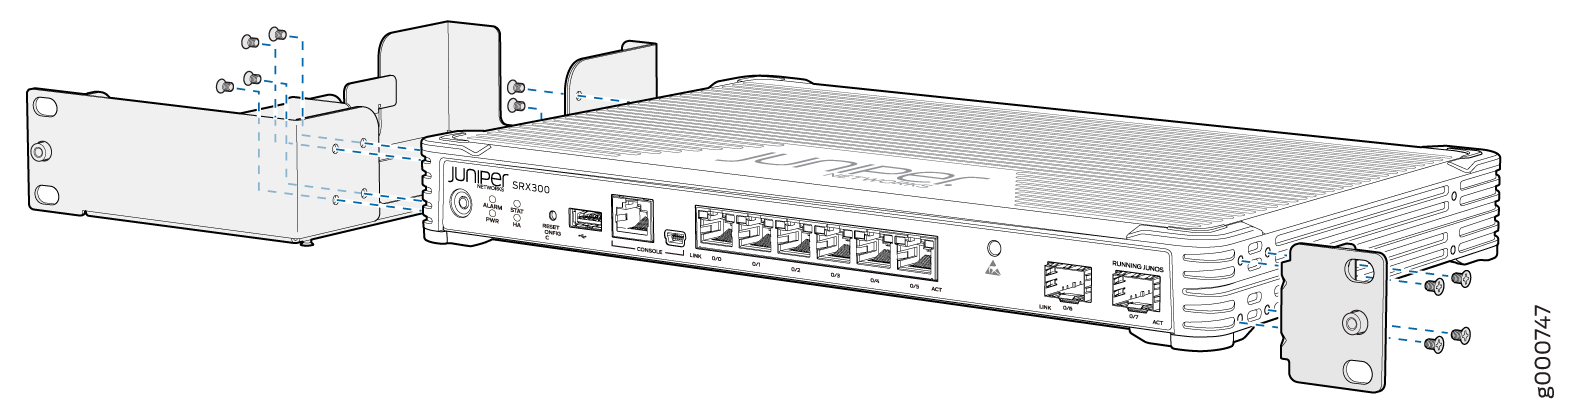 SRX300 Firewall Rack Installation — Positioning the Mounting Brackets